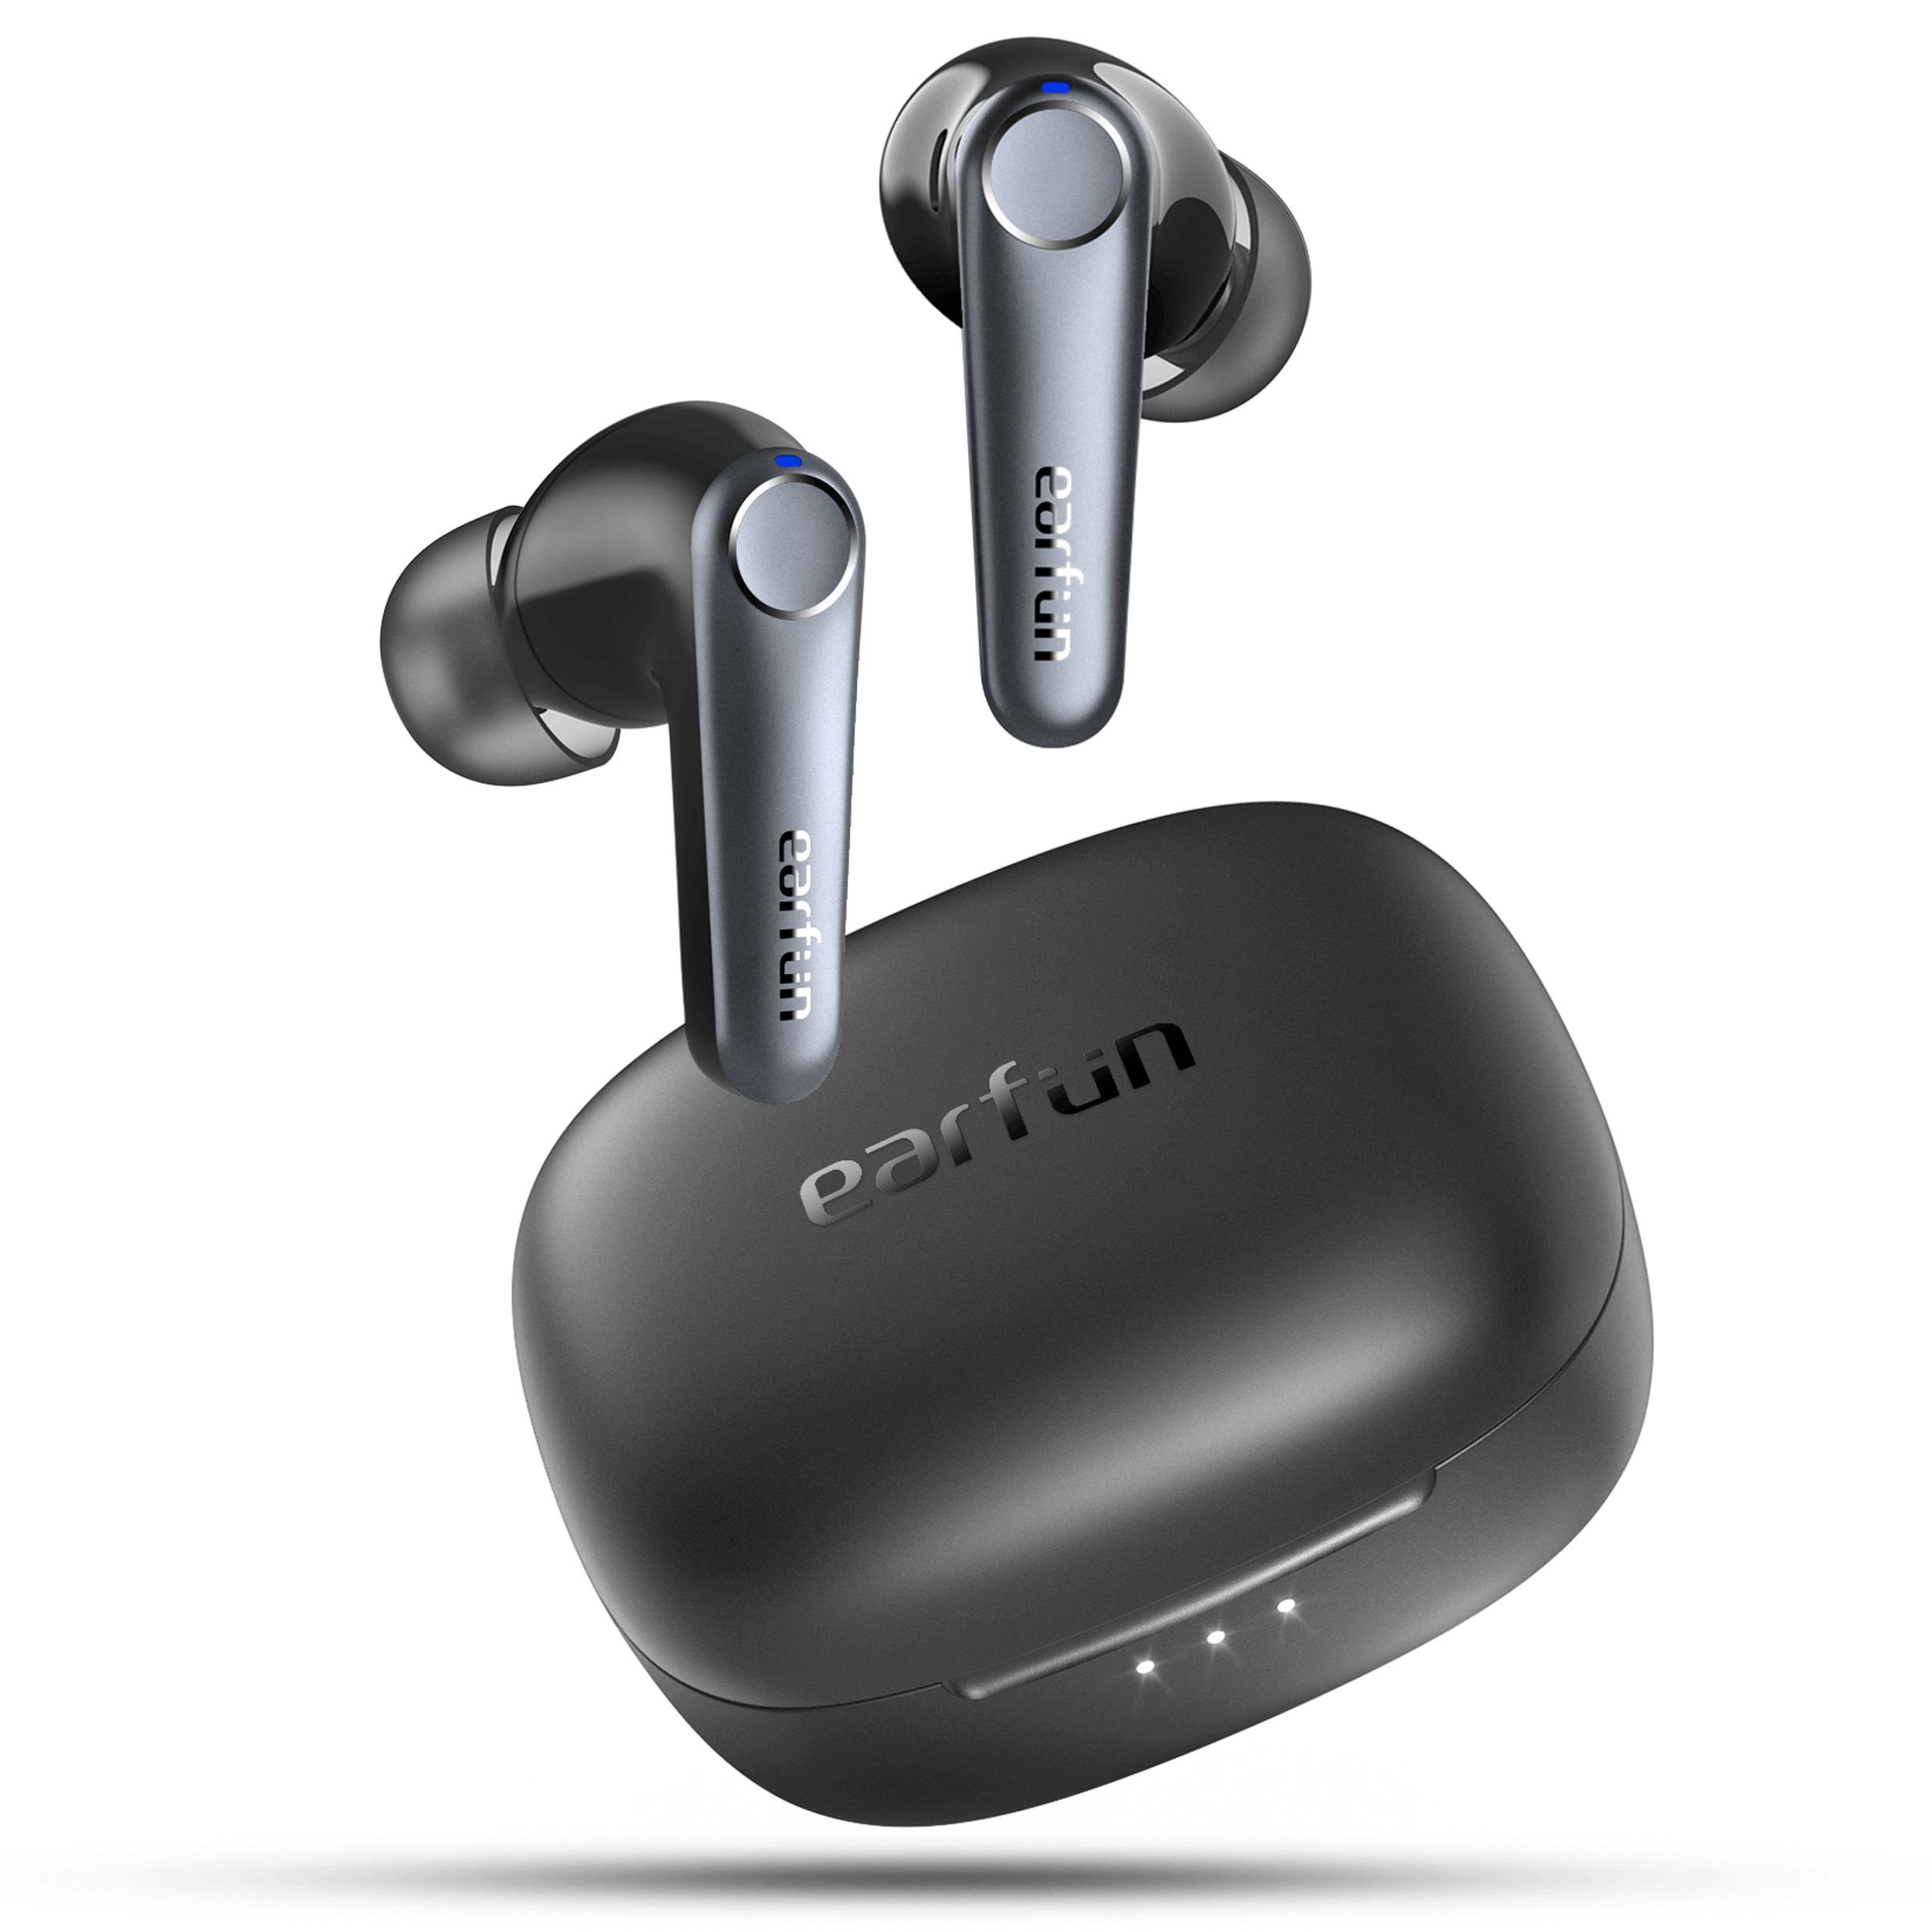 Earfun Air Pro 3 earbuds render